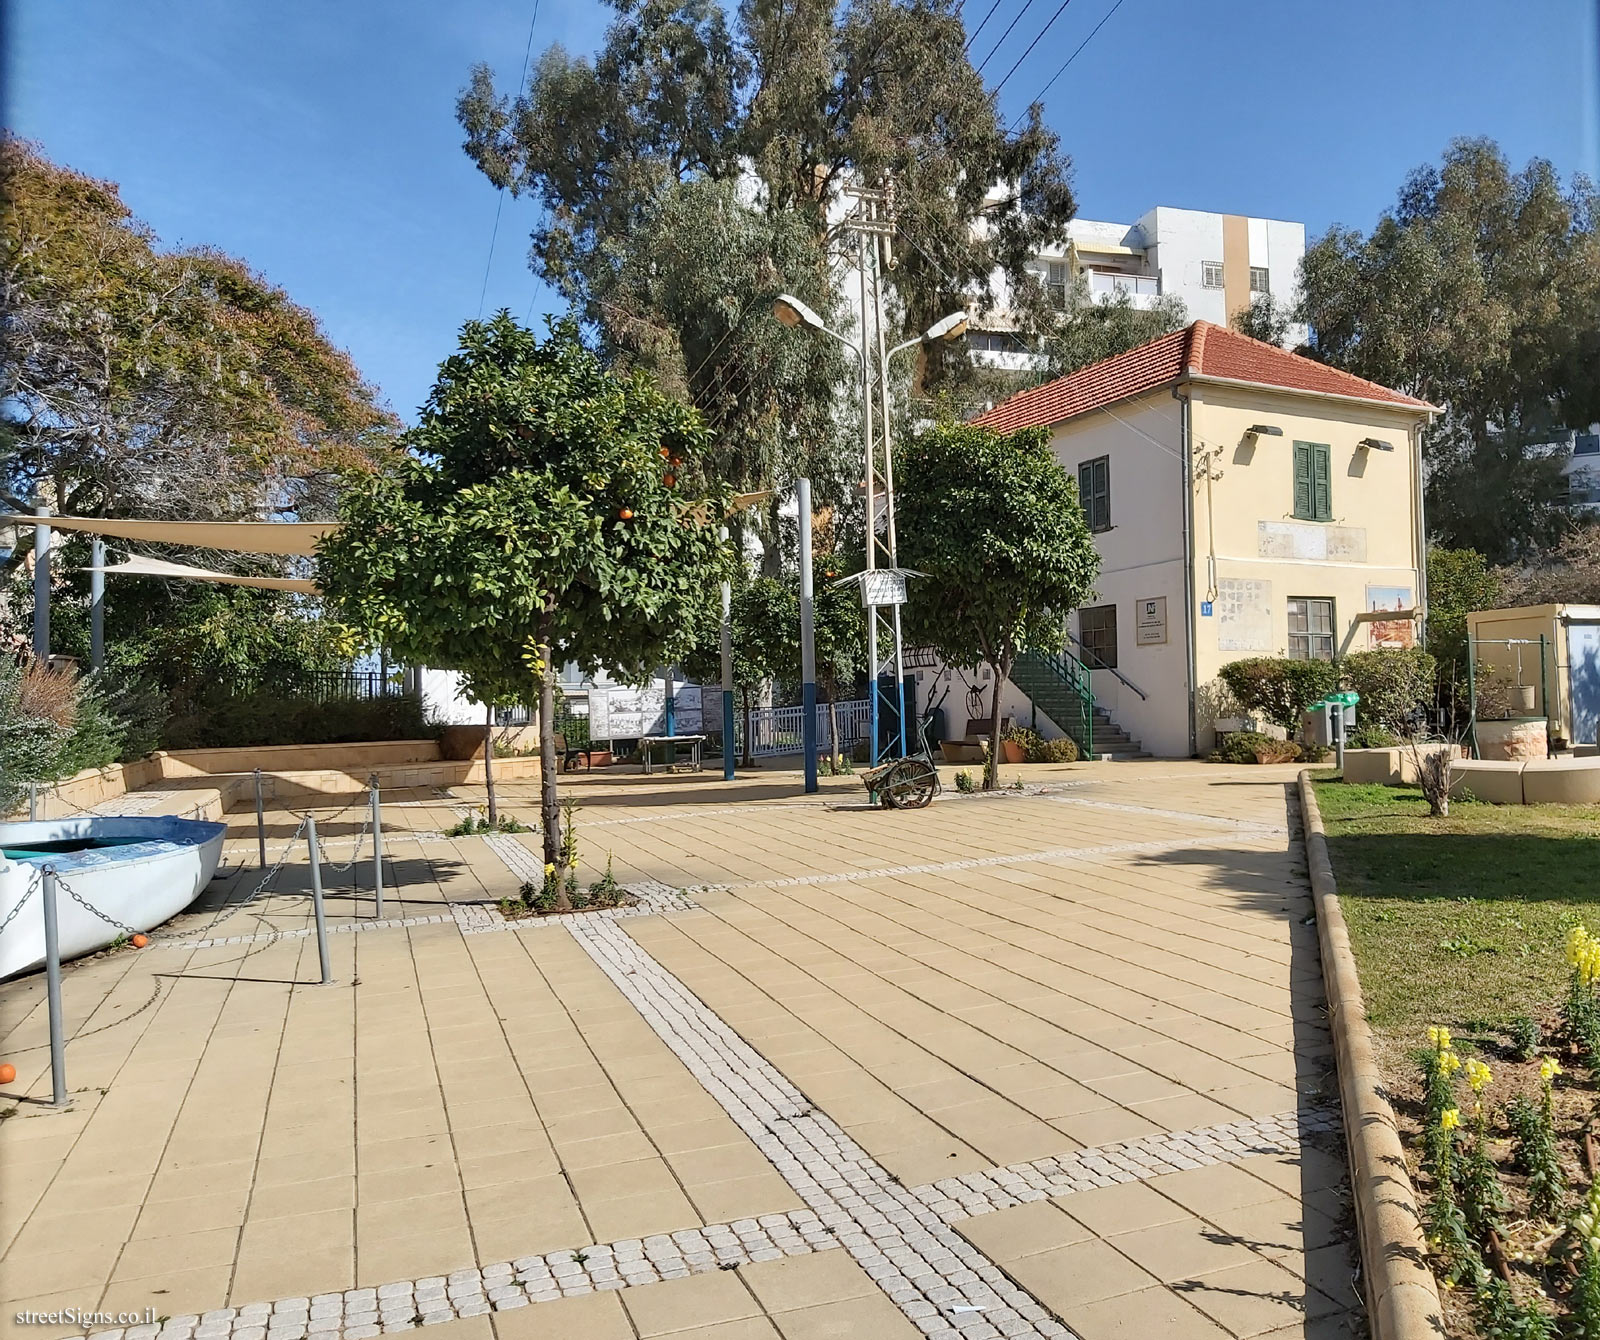 Heritage Sites in Israel - The Well House - Battalion Orchard Farm - Sokolov St 17, Netanya, Israel